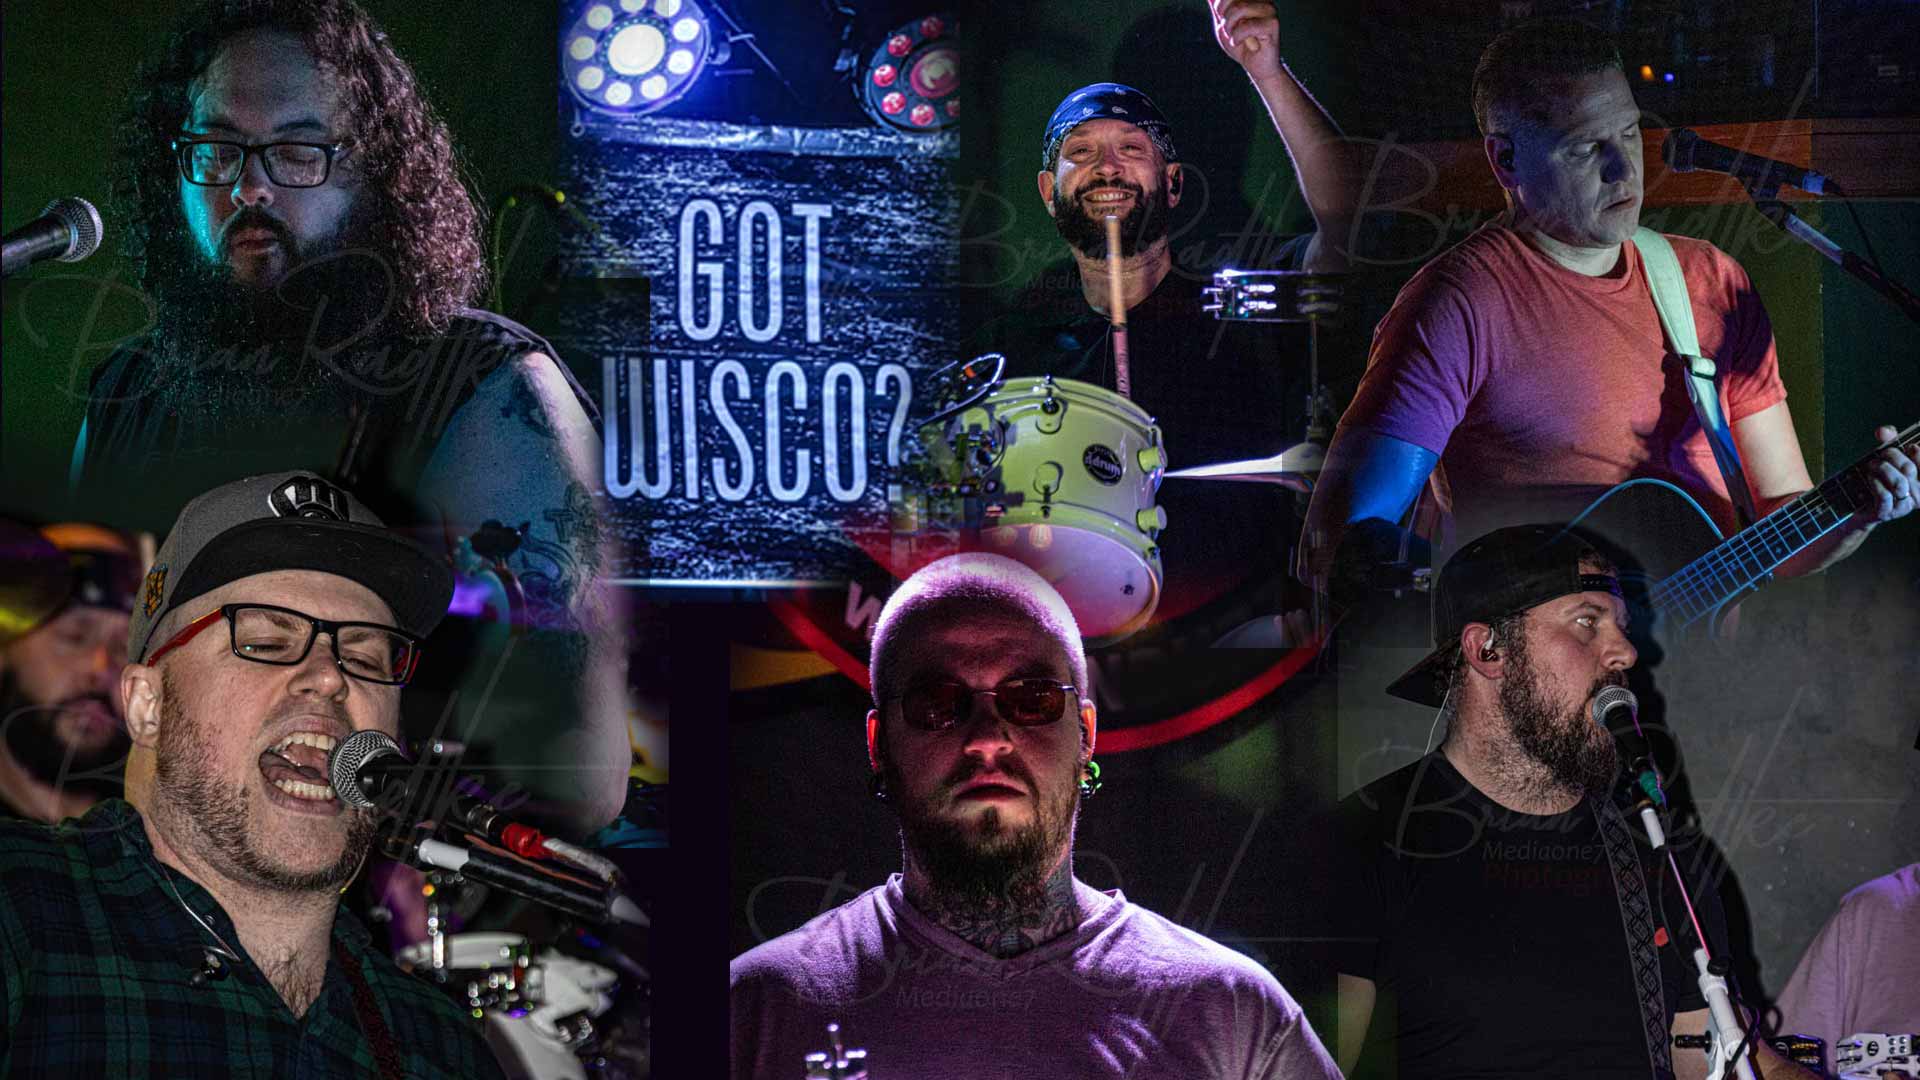 Got Wisco Band in Kimberly - Appleton Live Music Scene